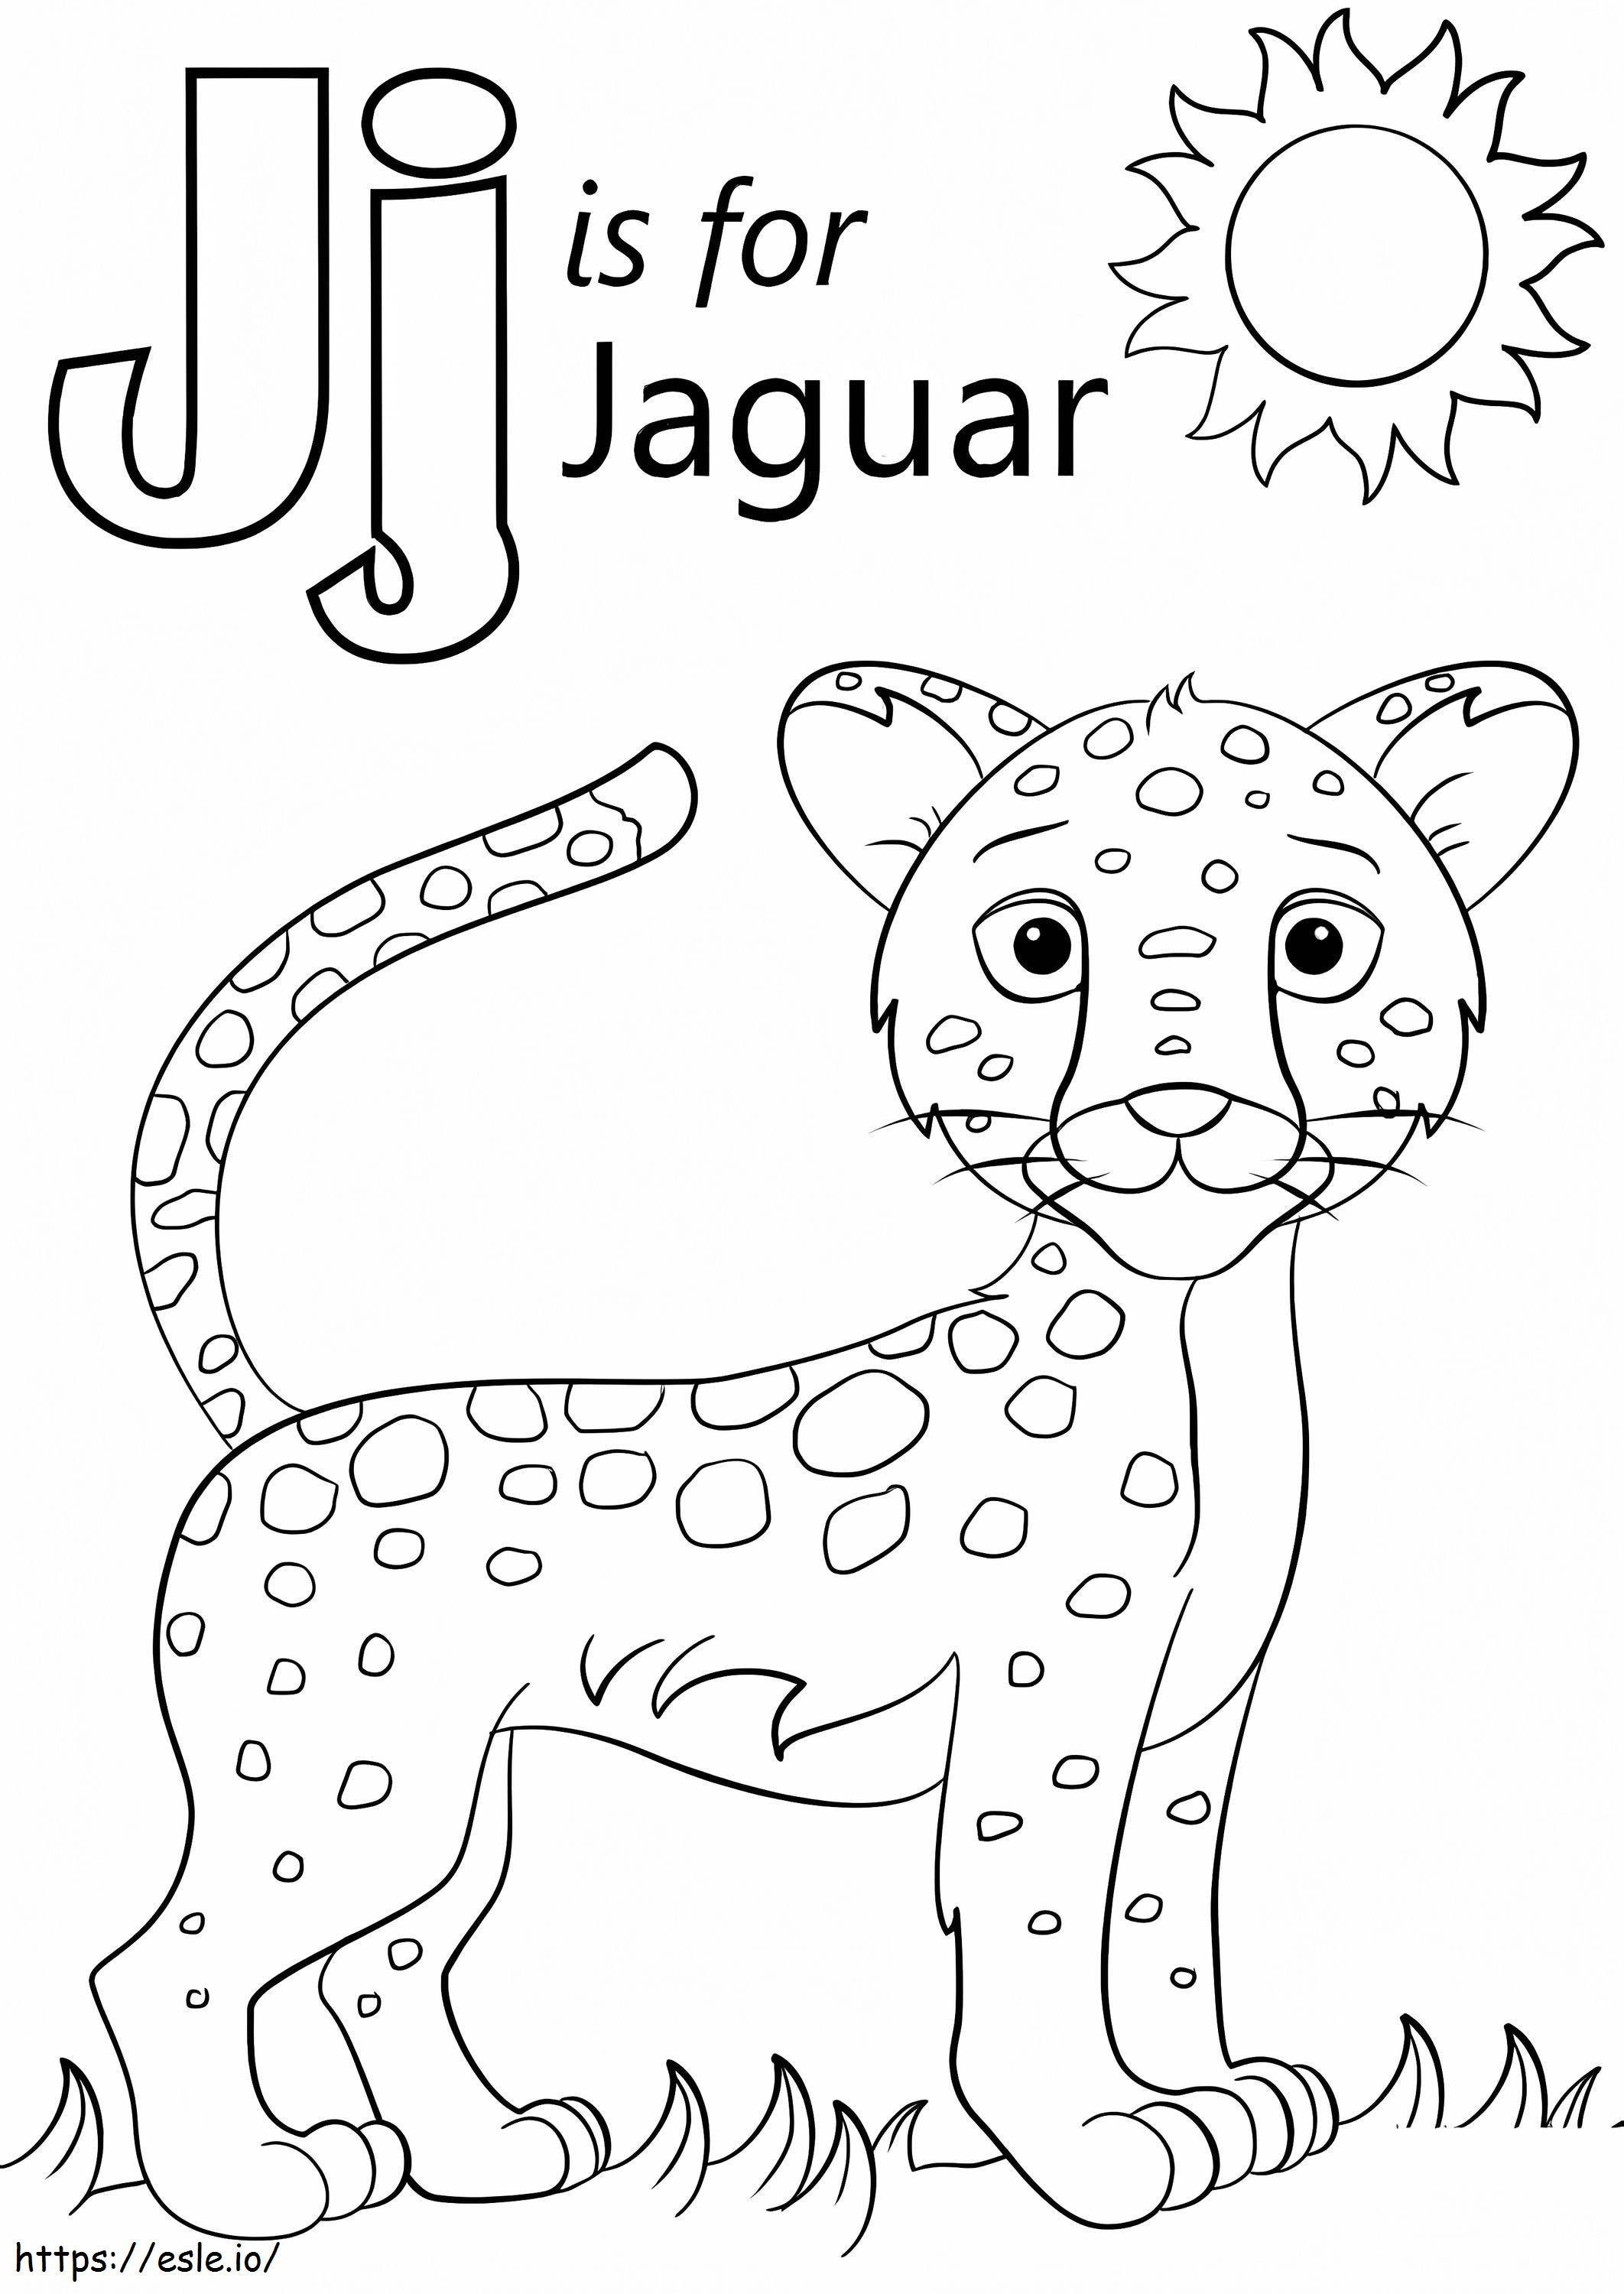 Letter J van Jaguar kleurplaat kleurplaat